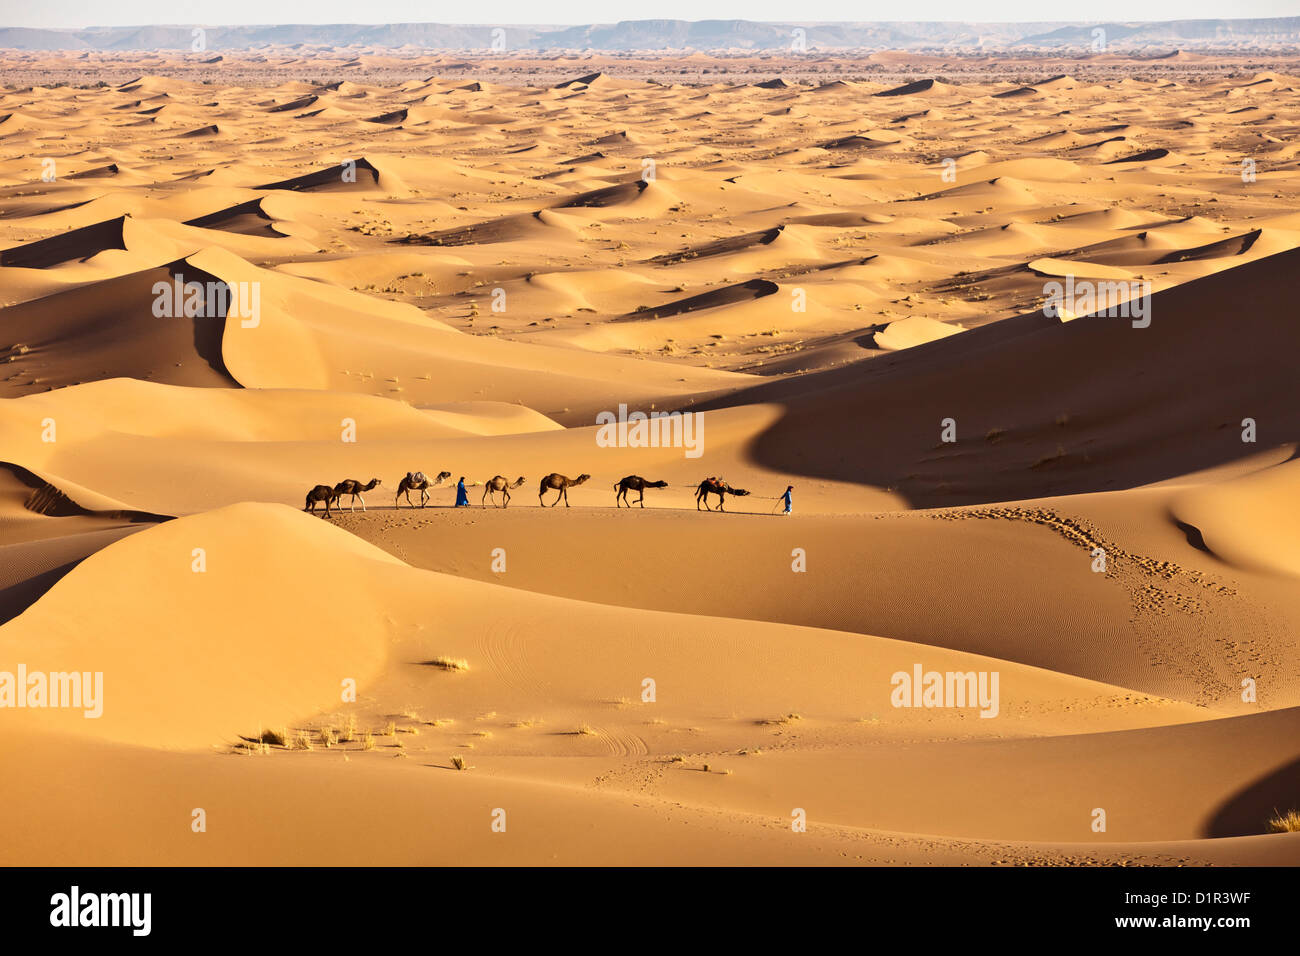 Morocco, M'Hamid, Erg Chigaga sand dunes. Sahara desert. Camel drivers and camel caravan. Stock Photo